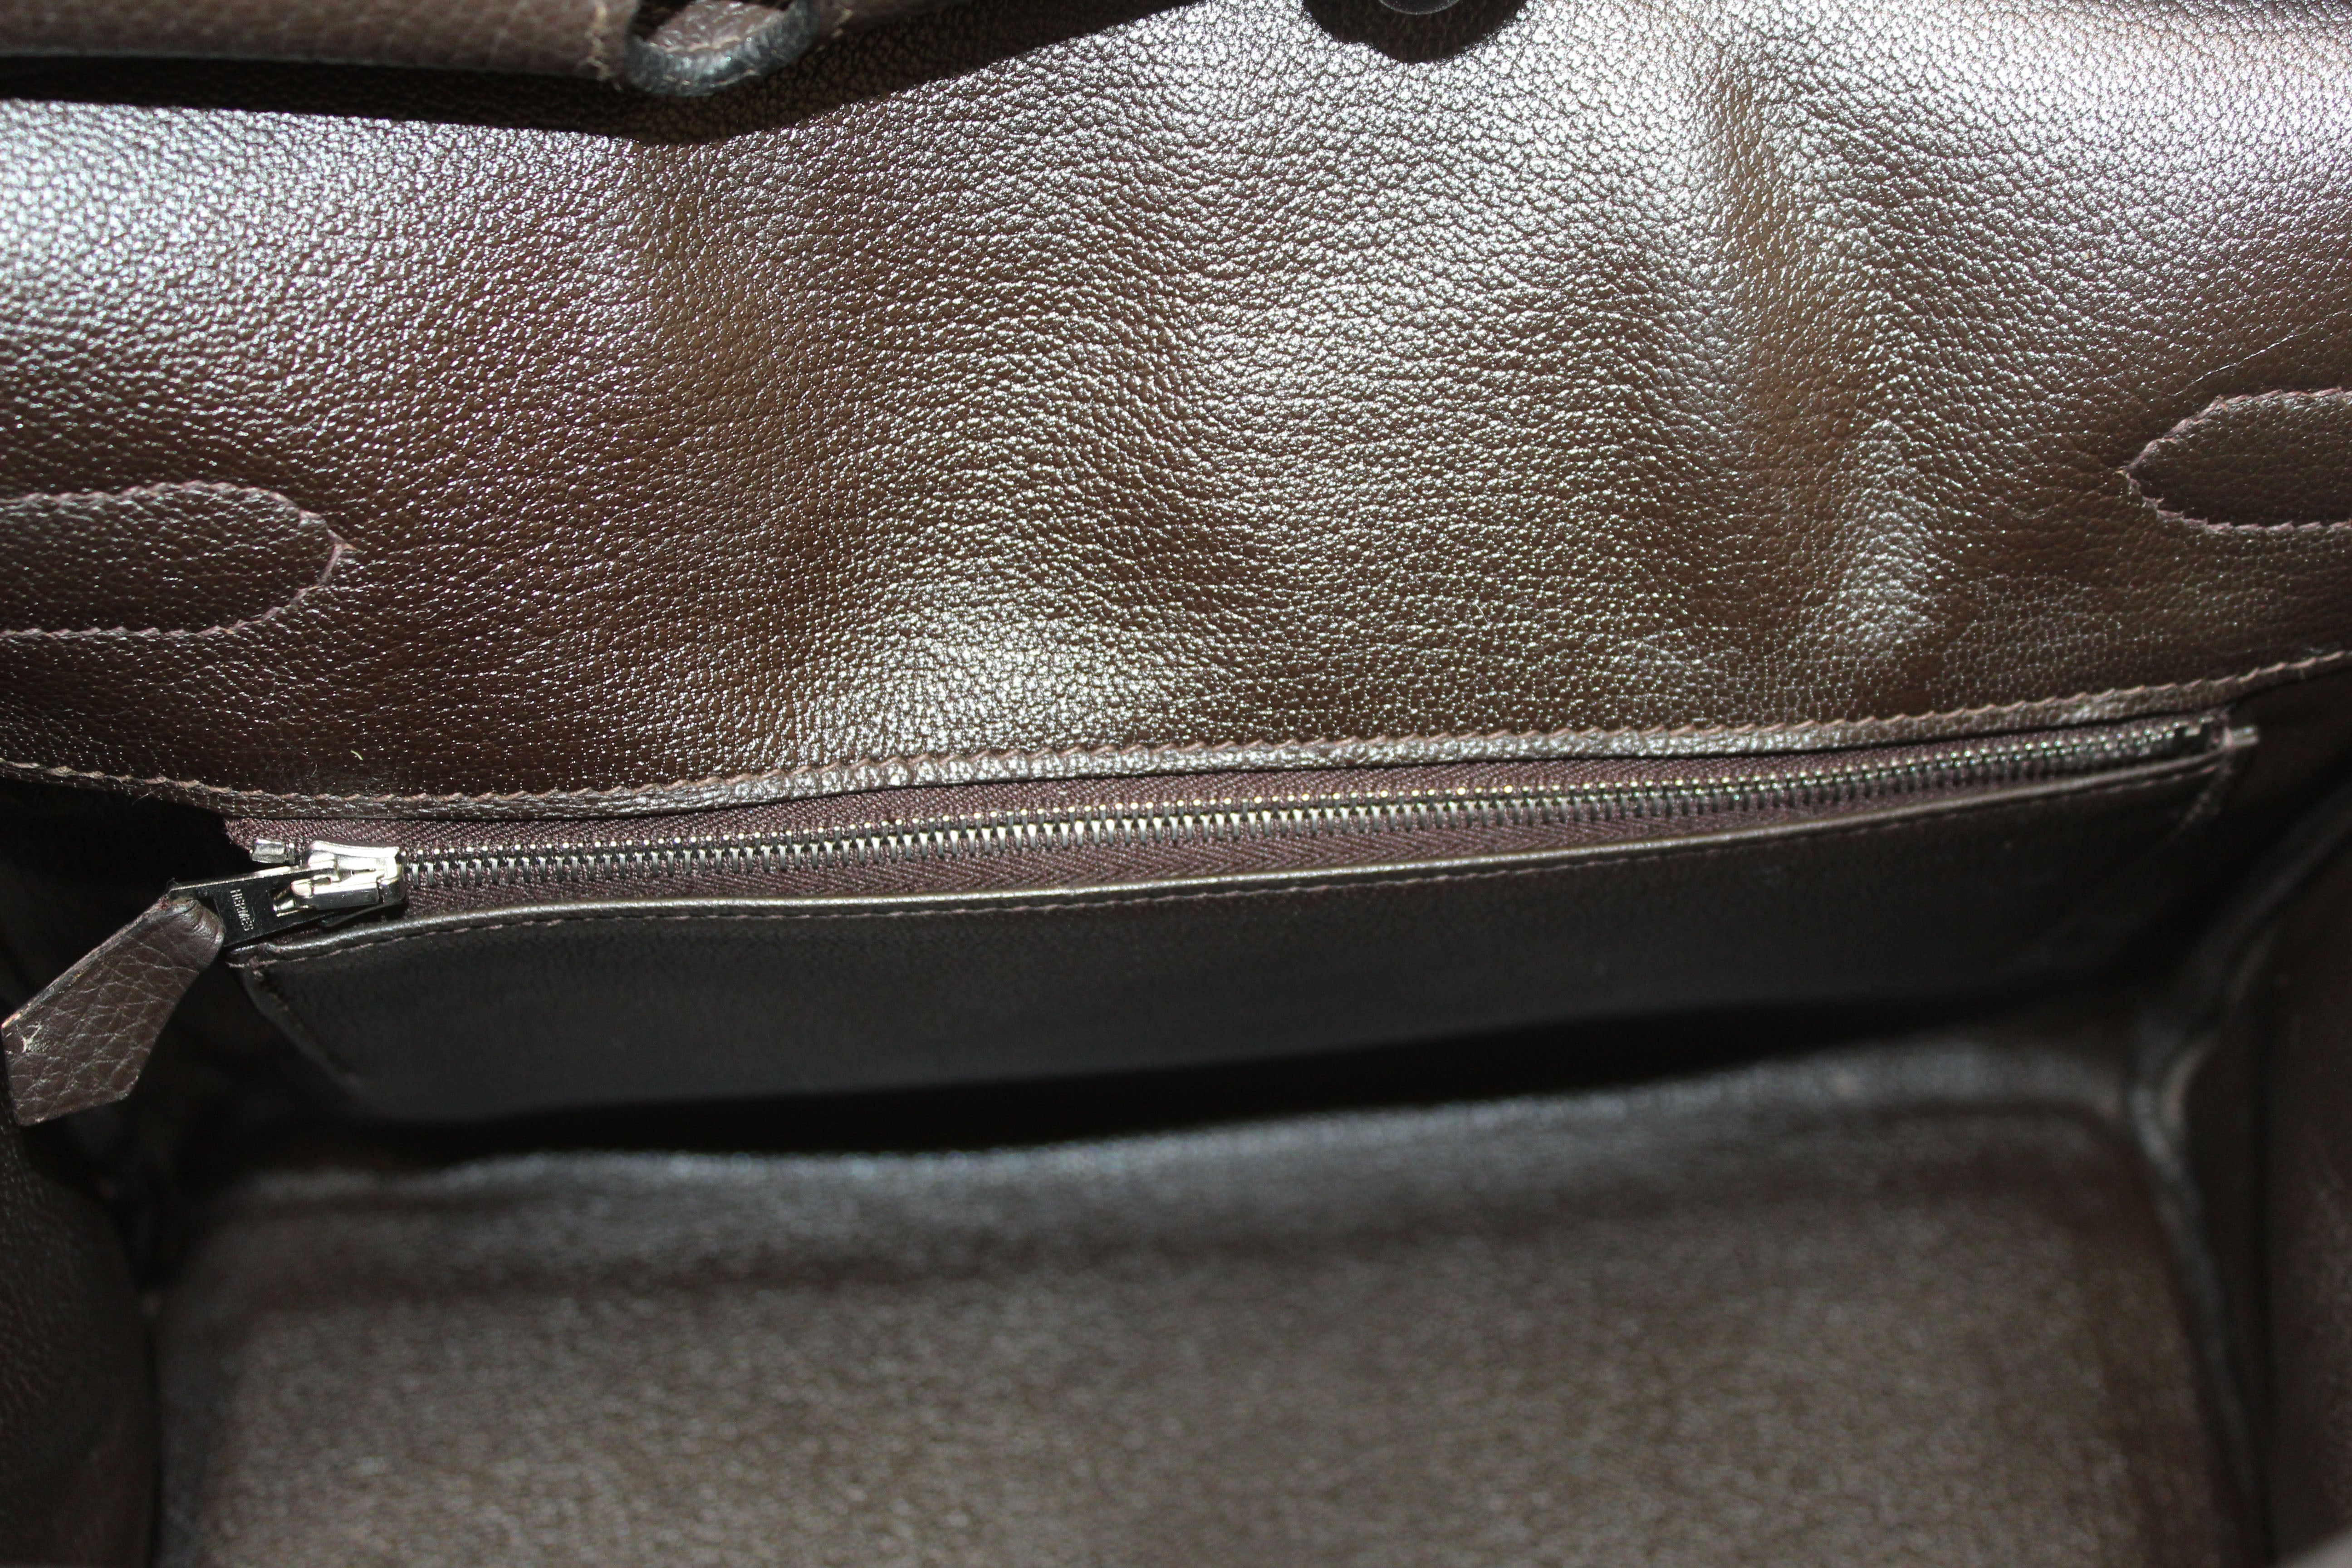 HERMES BIRKIN Bag 30cm TOGO Leather *CANOPEE*  Hermes bag birkin, Birkin  bag, Hermes birkin bag 30cm